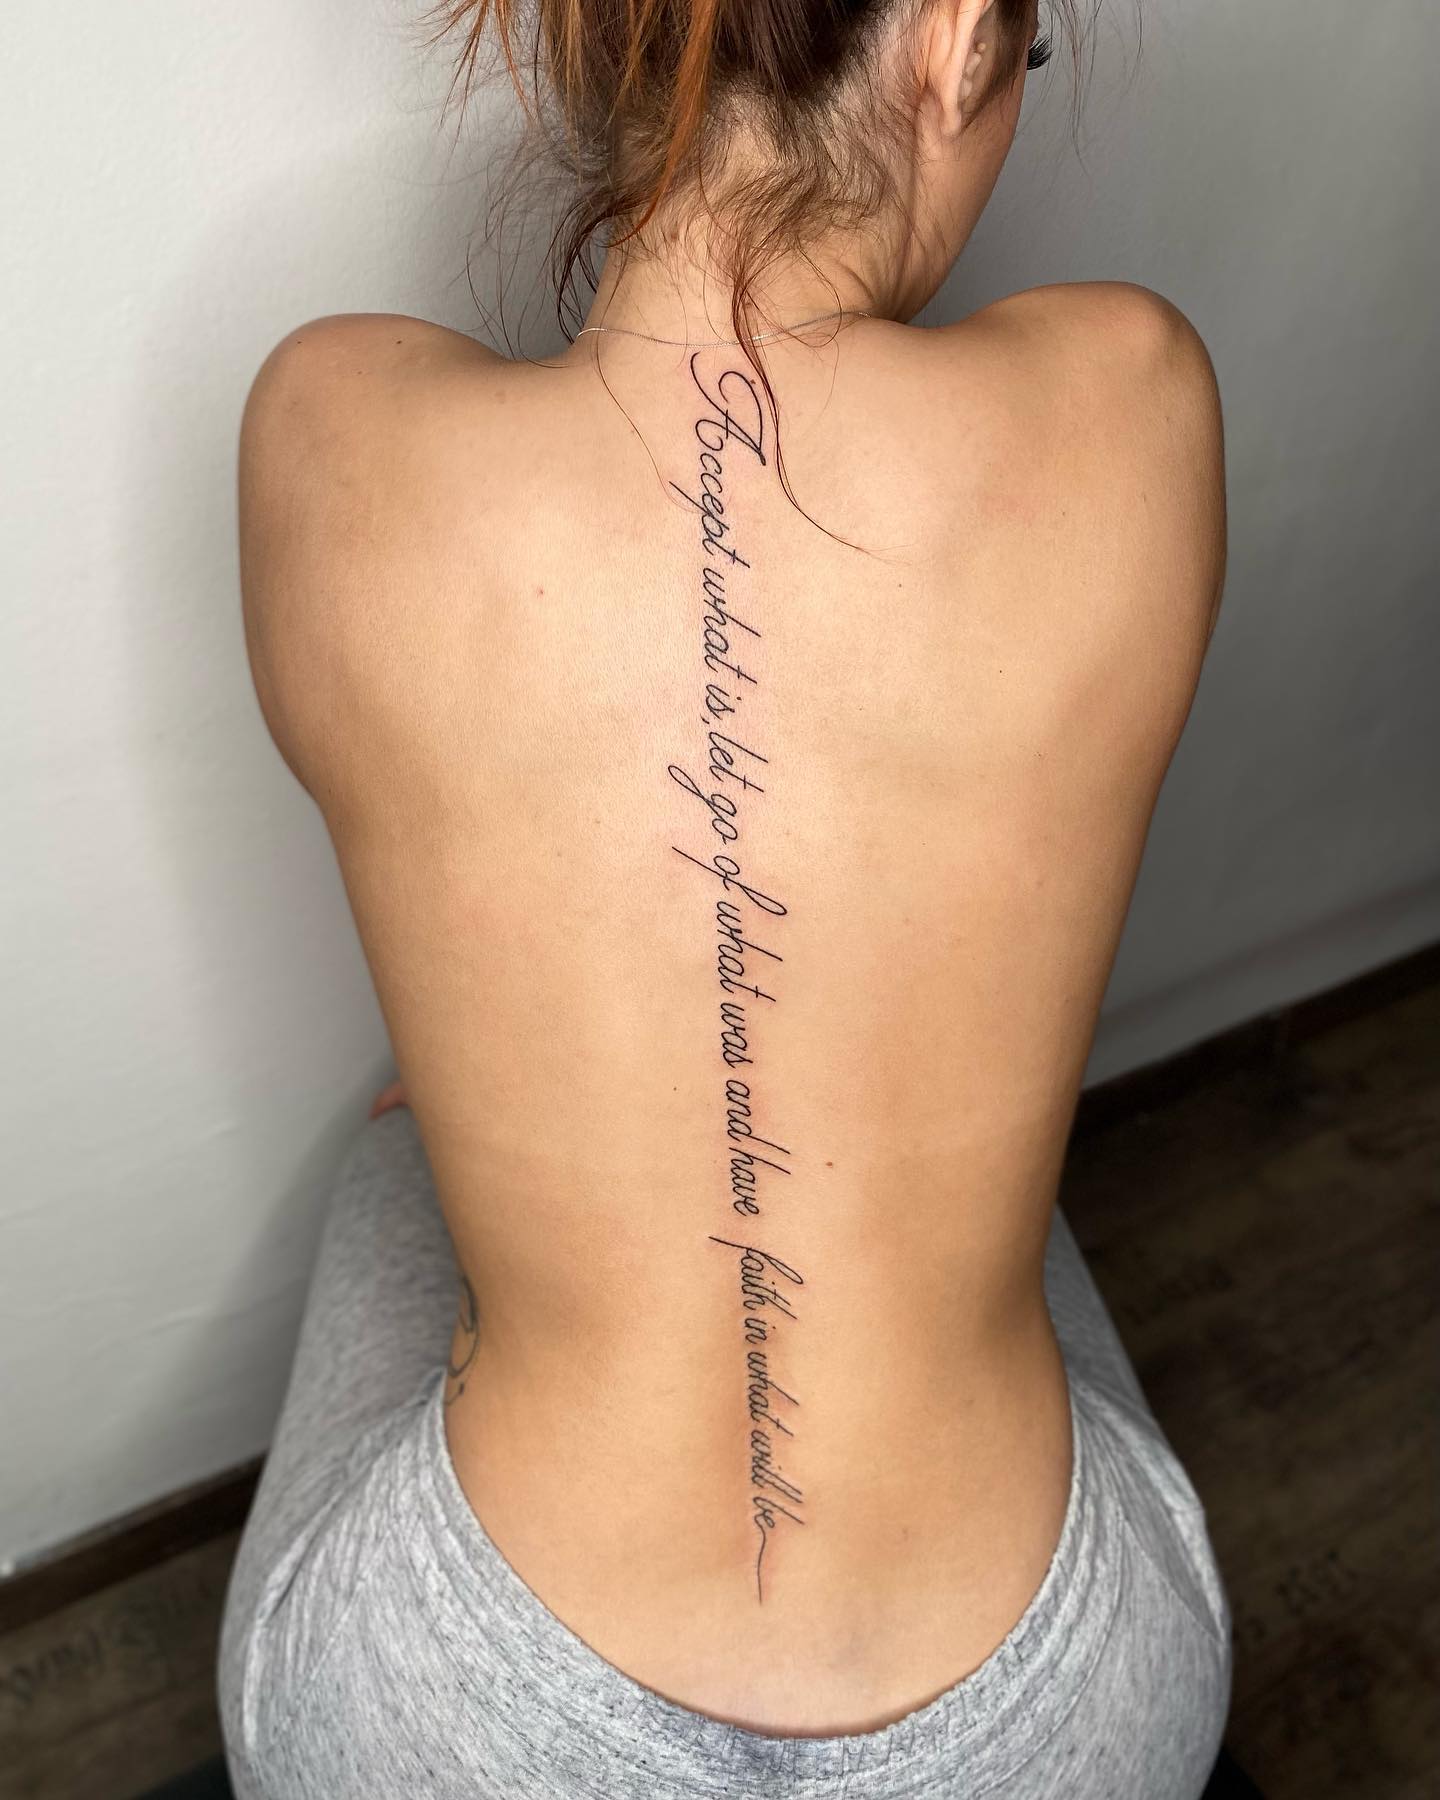 Diseño de tatuaje en la columna vertebral con cita.